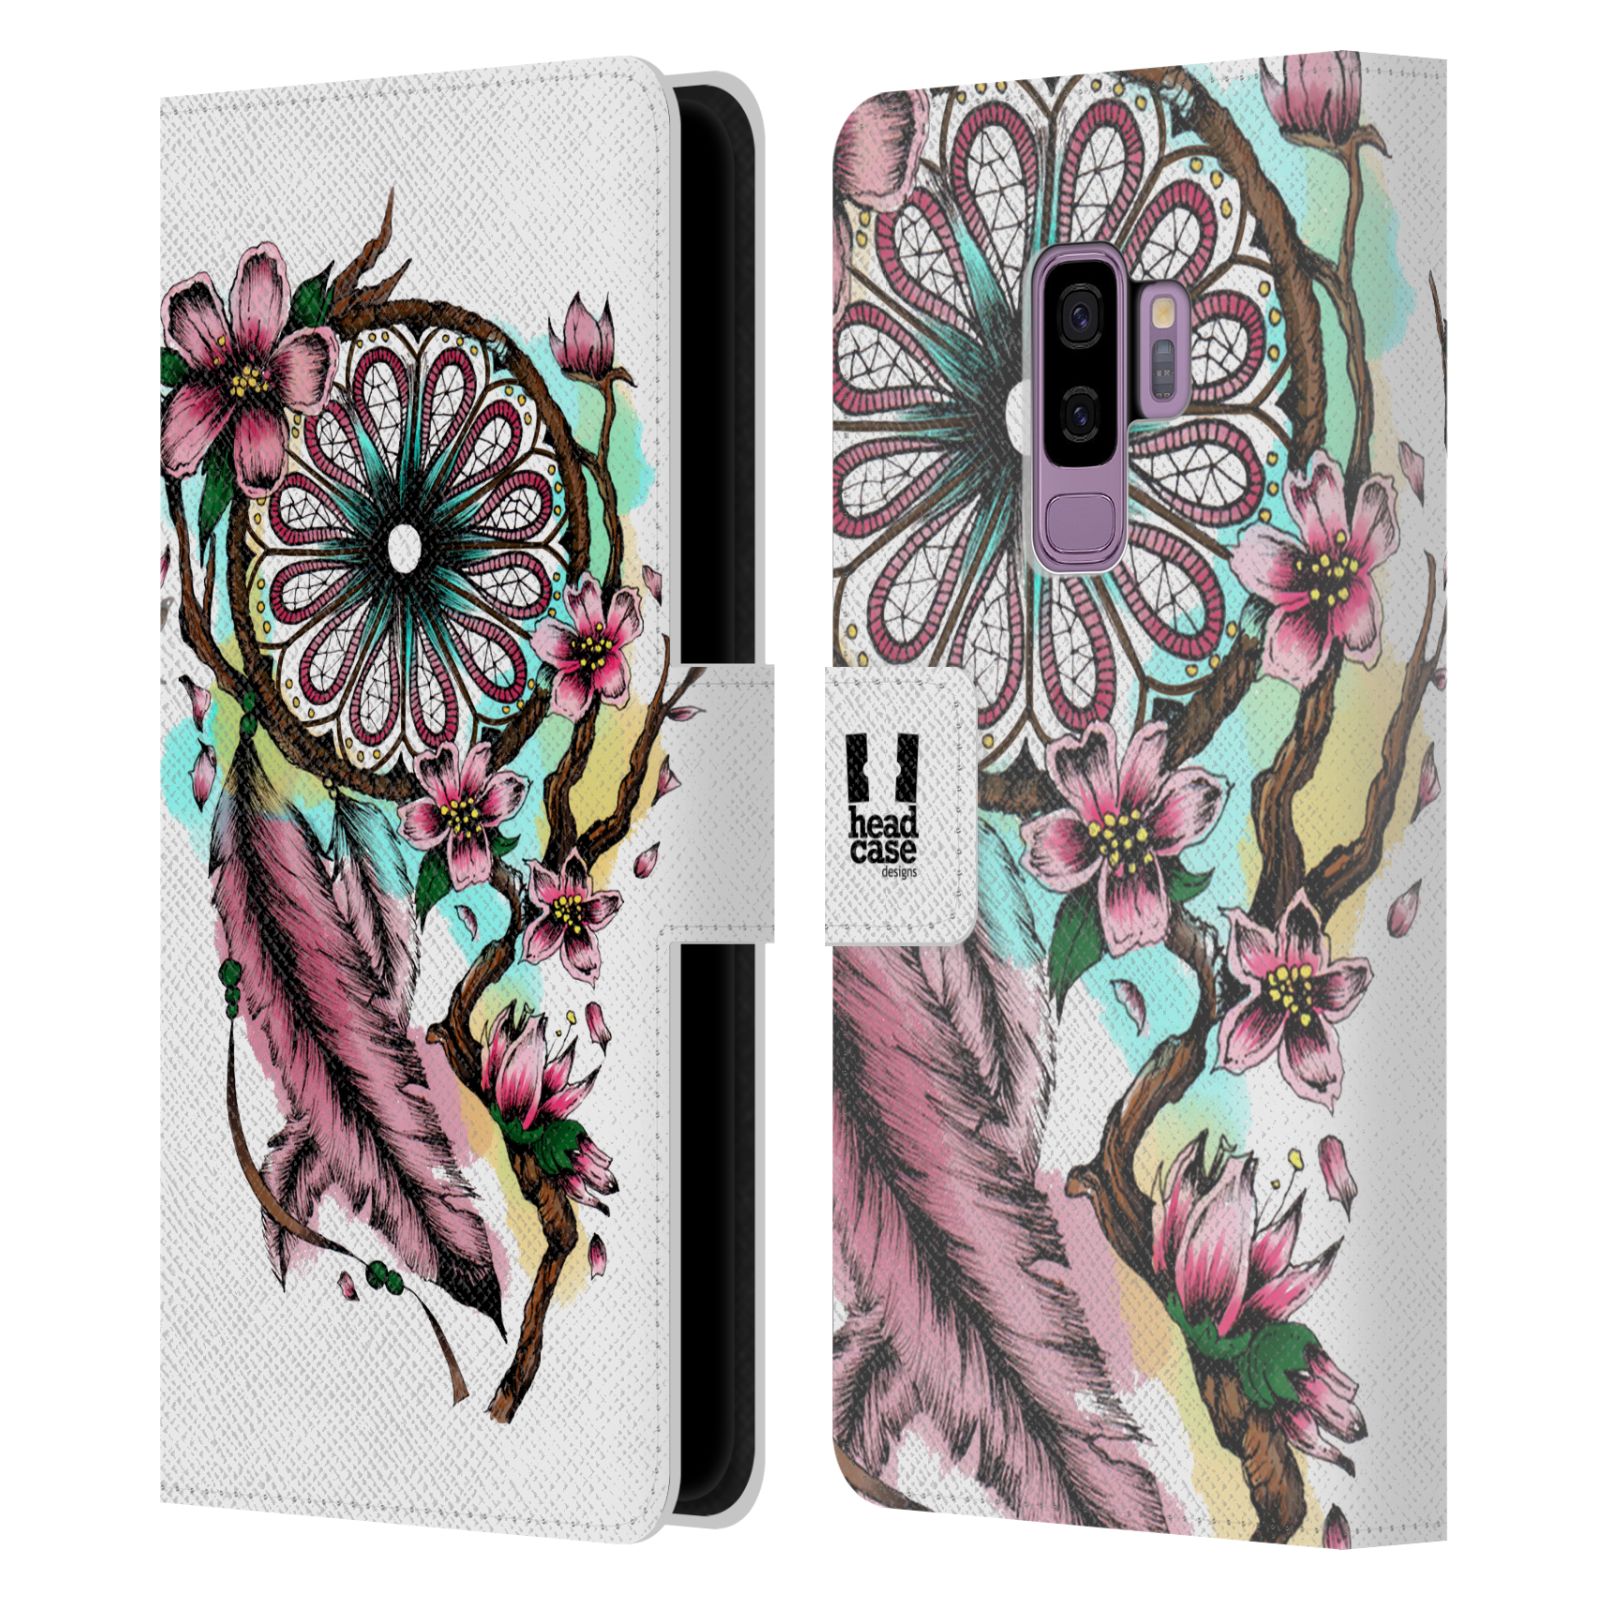 Pouzdro pro mobil Samsung Galaxy S9+ / S9 PLUS - Květinový vzor lapač snů